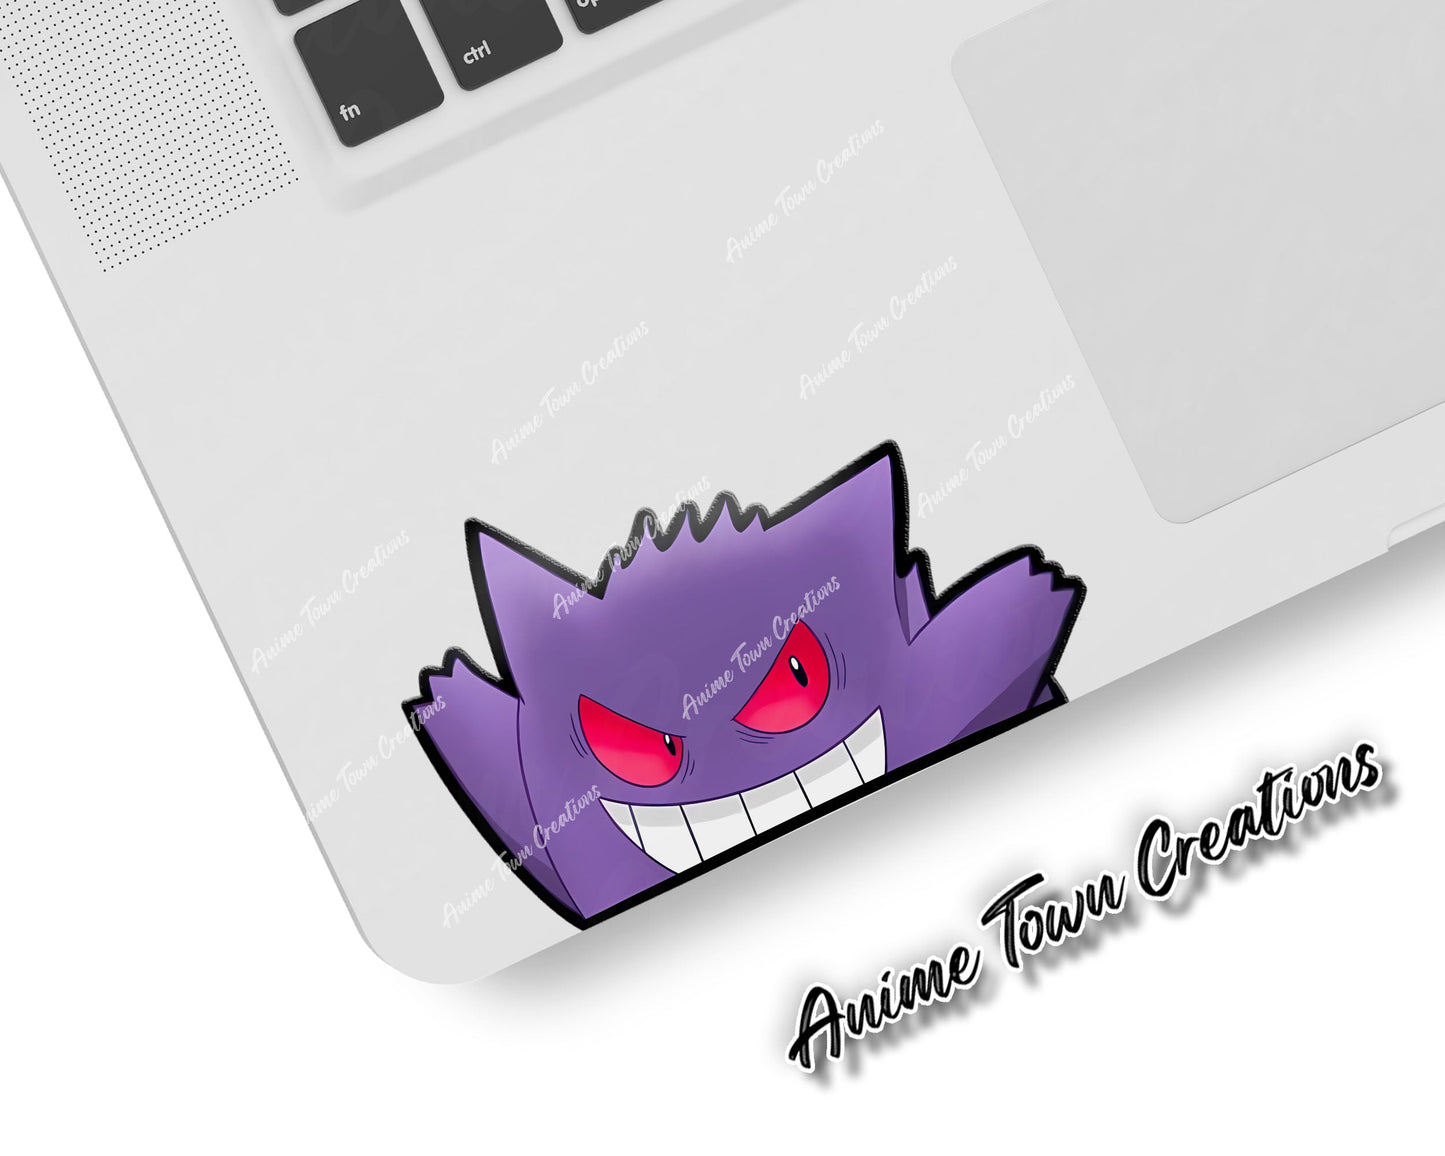 Anime Town Creations Sticker Pokemon Gengar Peeker 5" Accessories - Anime Pokemon Sticker